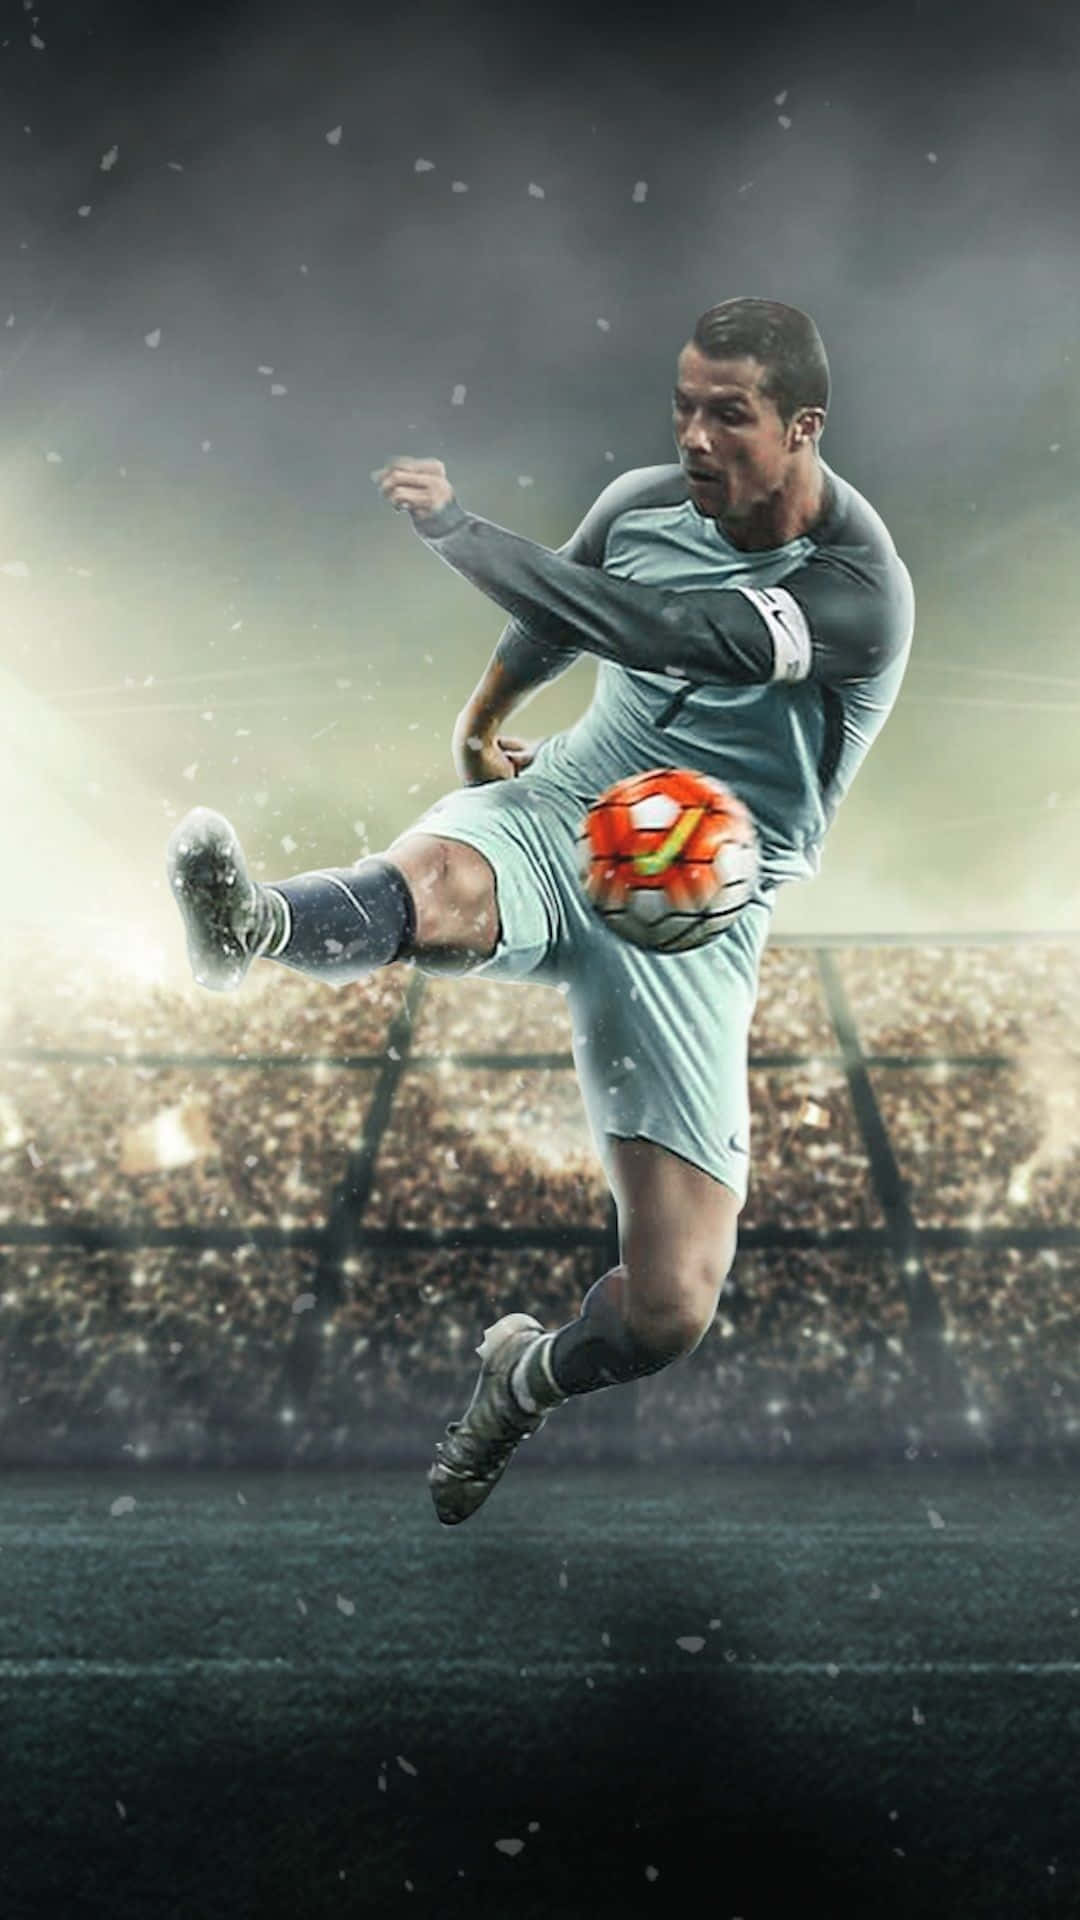 A Soccer Player Kicking A Ball In The Air Wallpaper